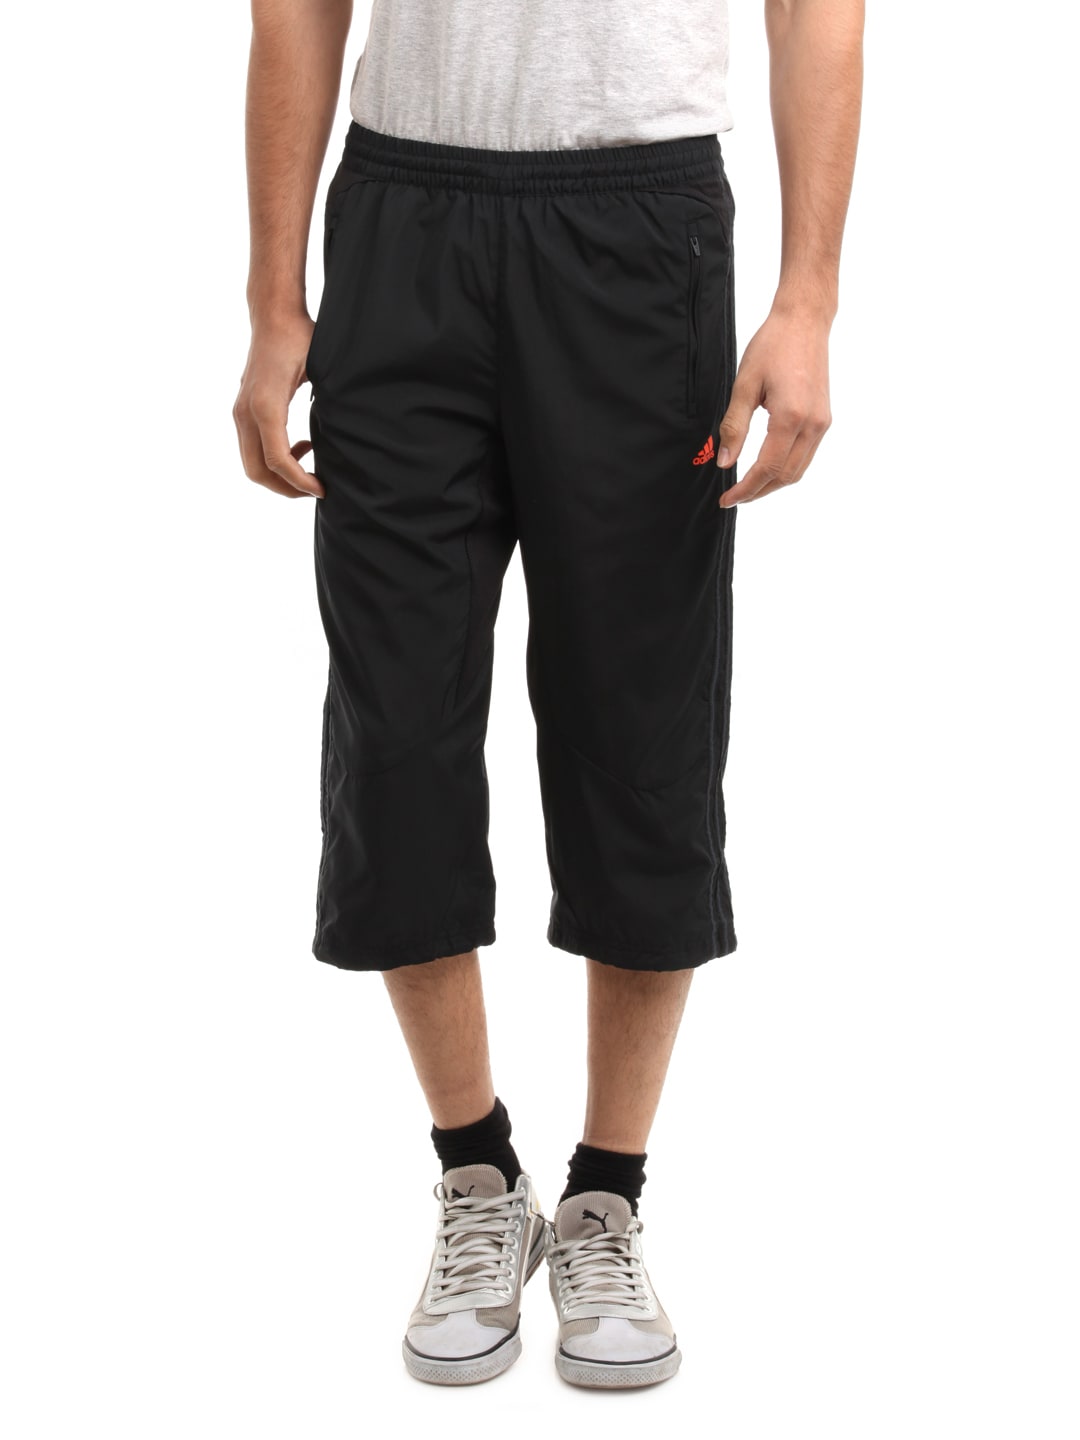 ADIDAS Men Black 3/4 Length Pants